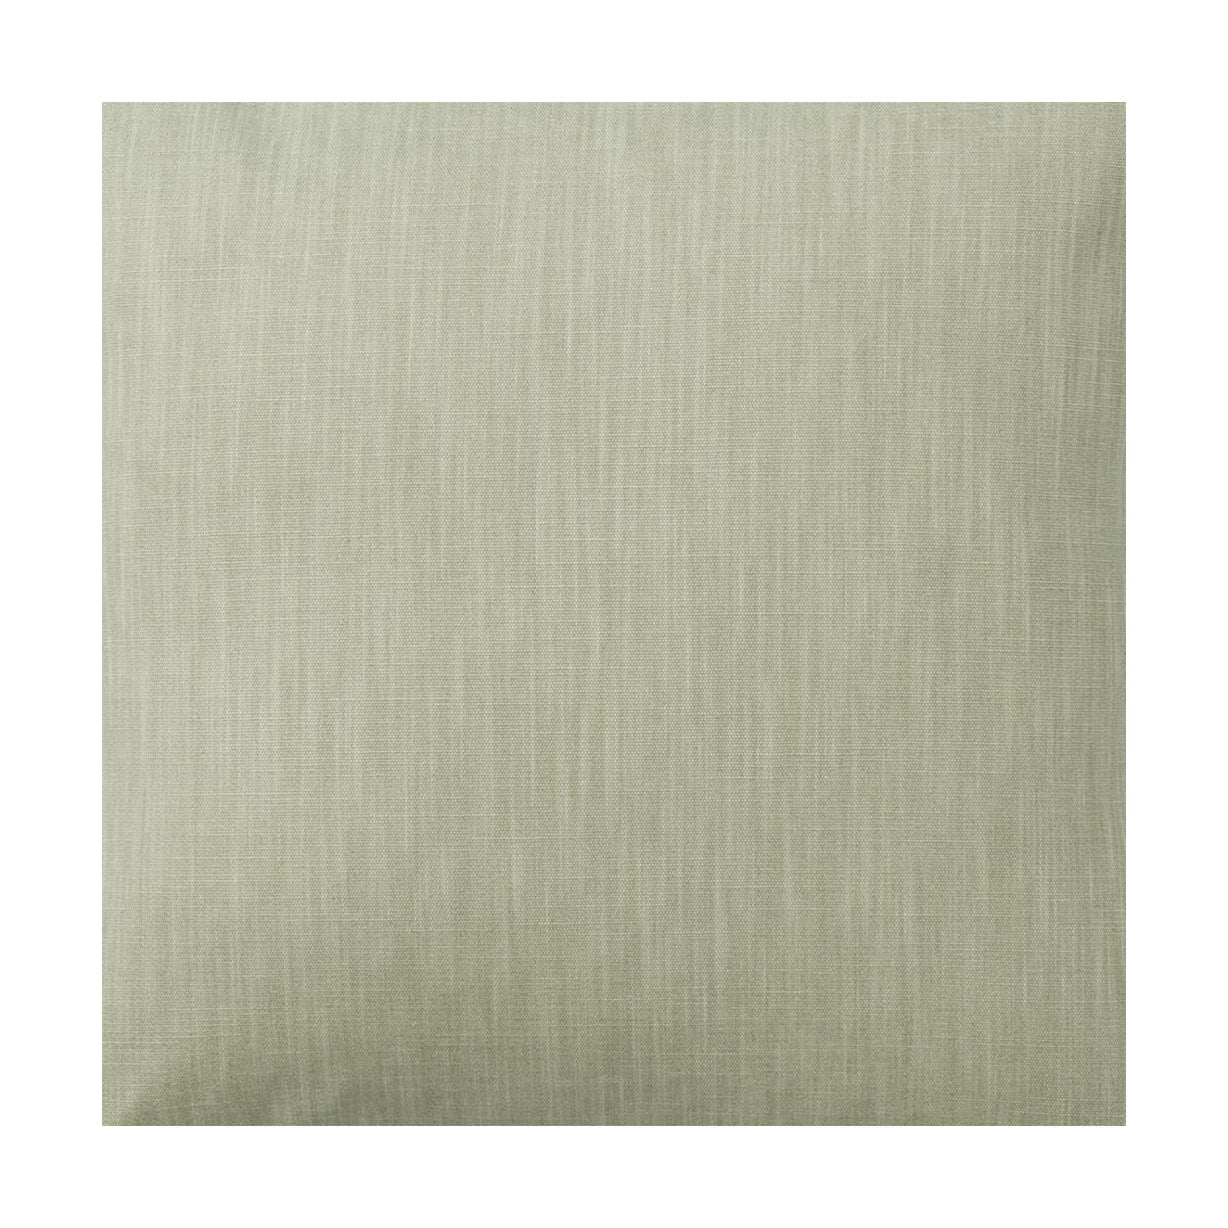 Spira Klotz Fabric Width 150 Cm (Price Per Meter), Dusty Green